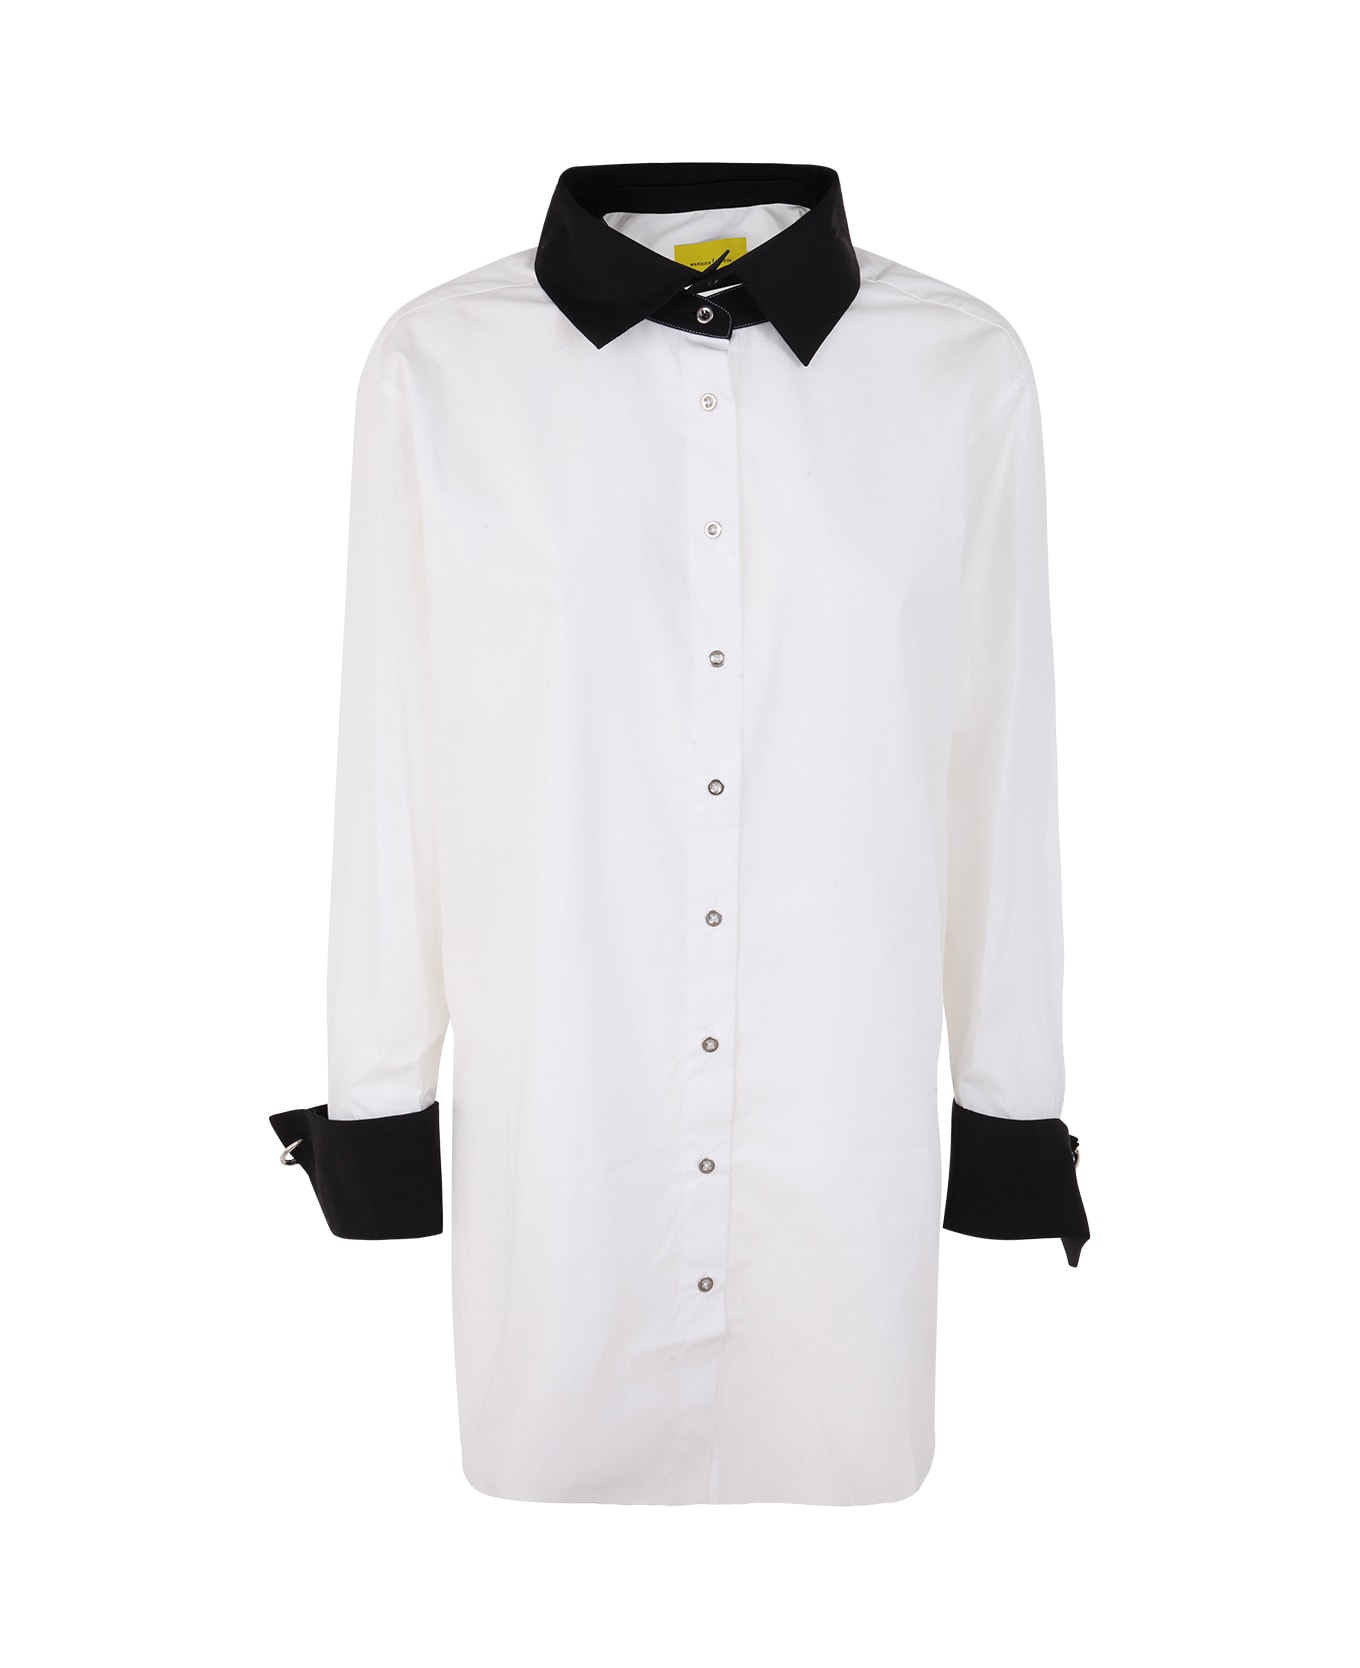 Marques'Almeida Shirt With Detachable Cuffs And Collar - Black/white シャツ